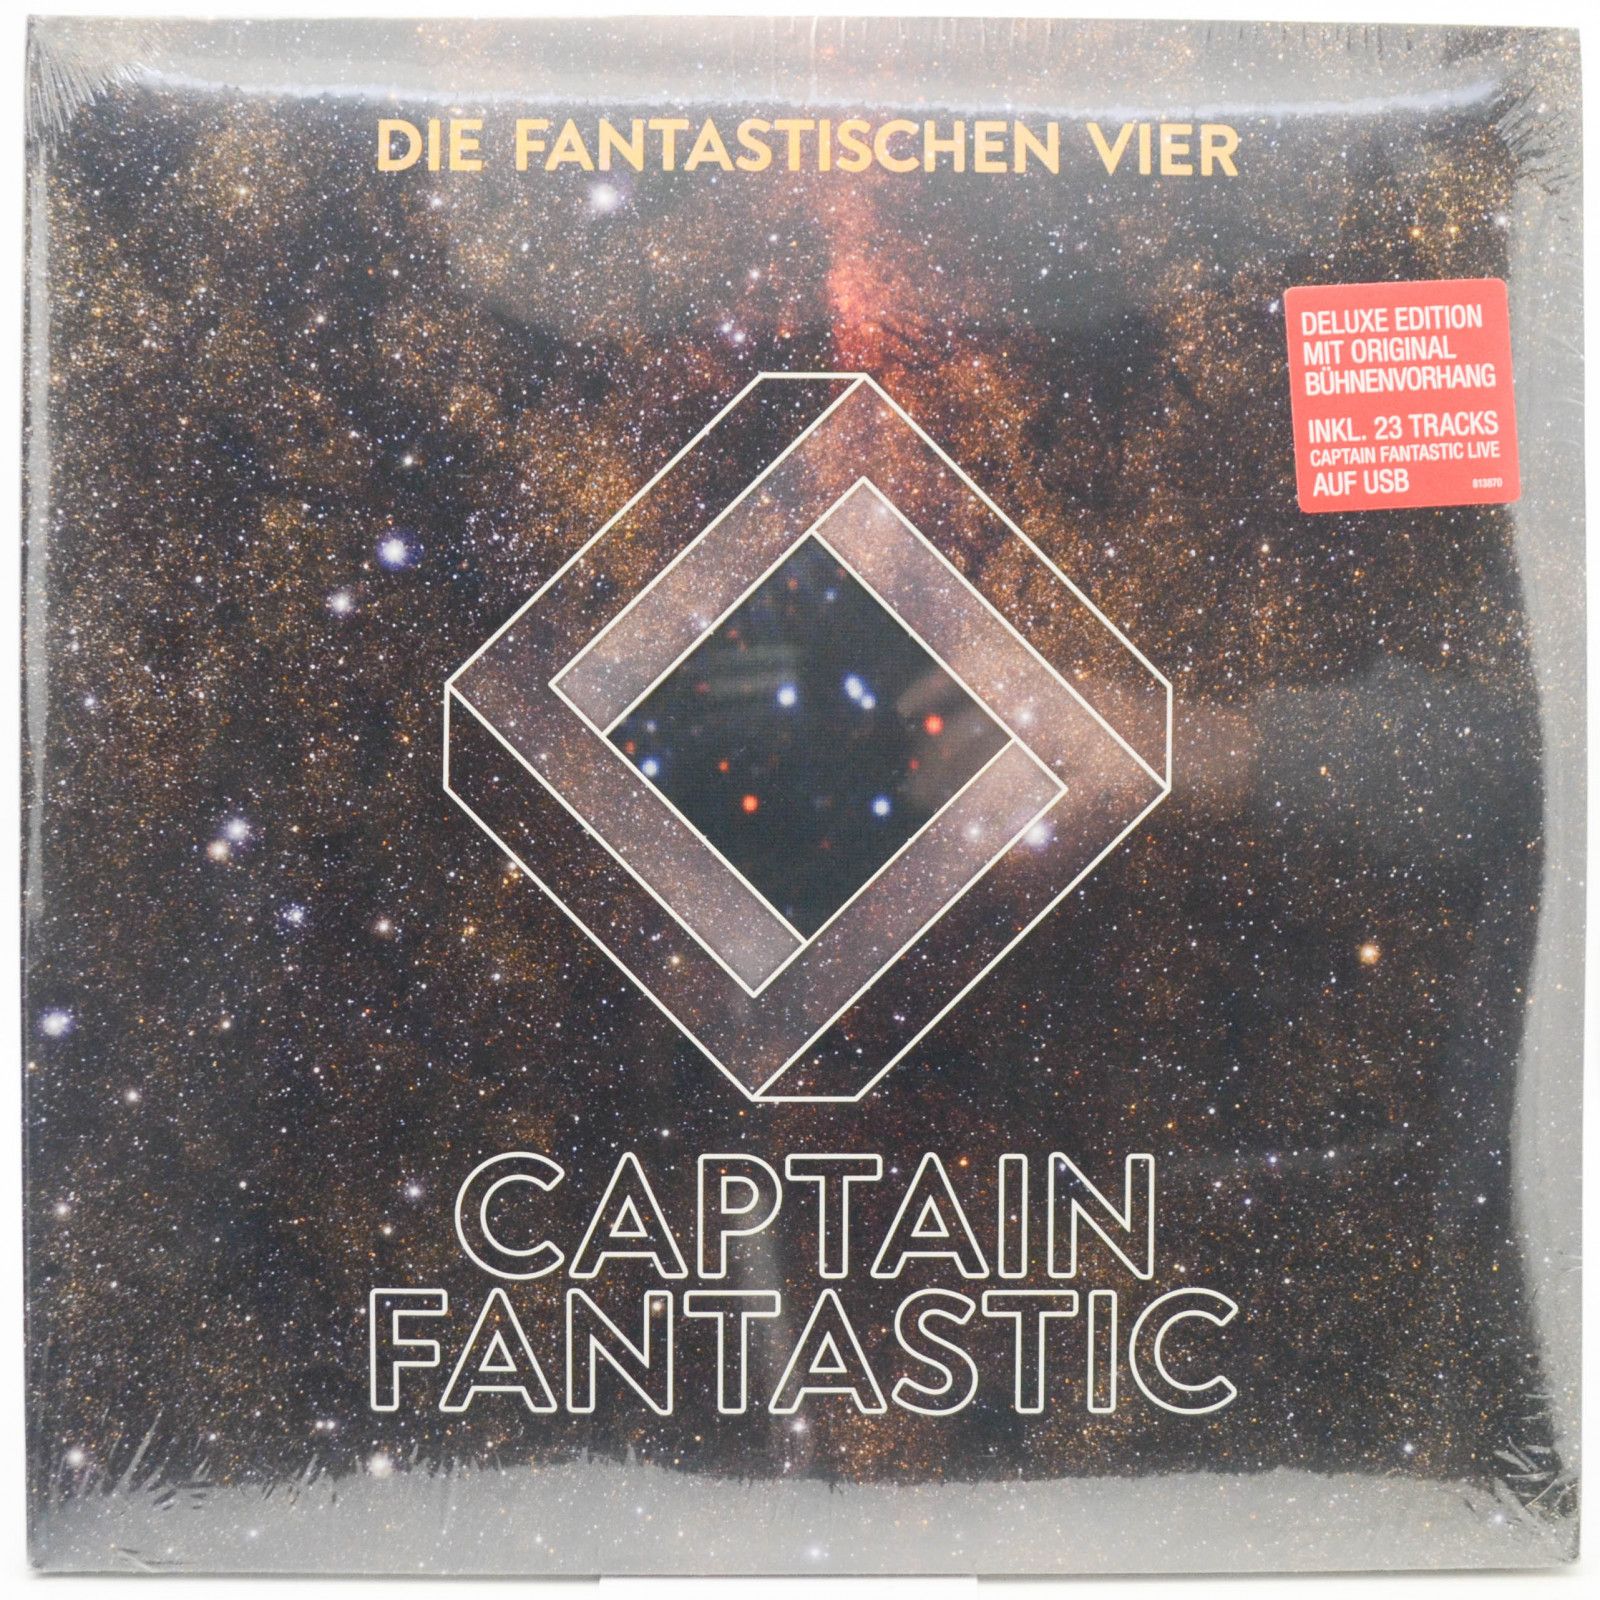 Die Fantastischen Vier — Captain Fantastic (2LP + USB-Memory Stick), 2021